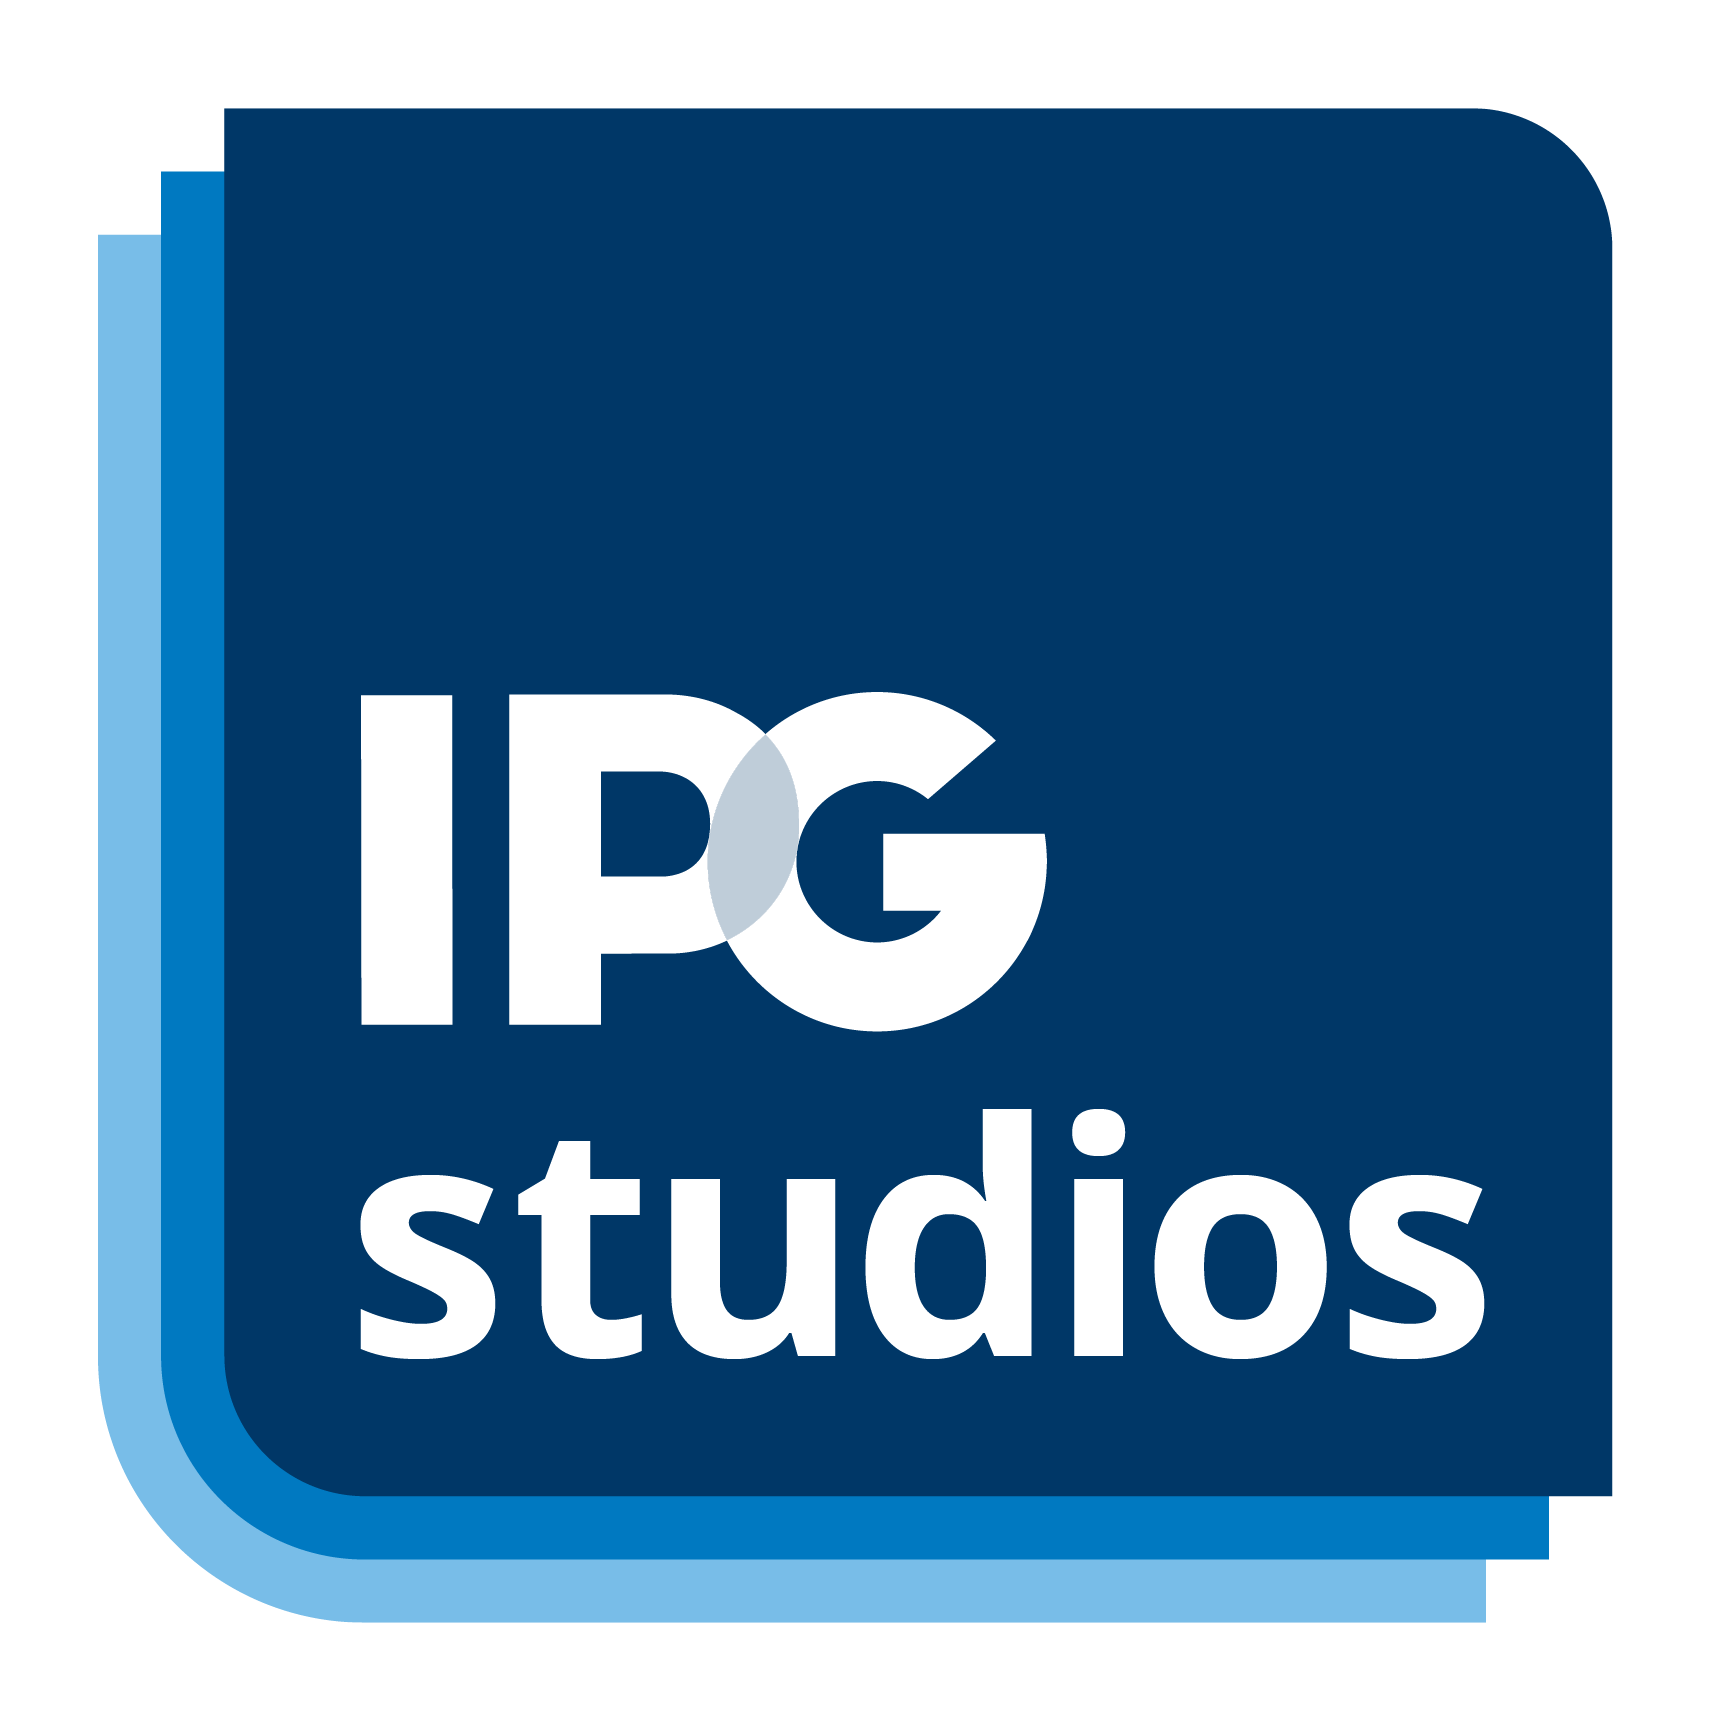 IPG Studios logo with blue background